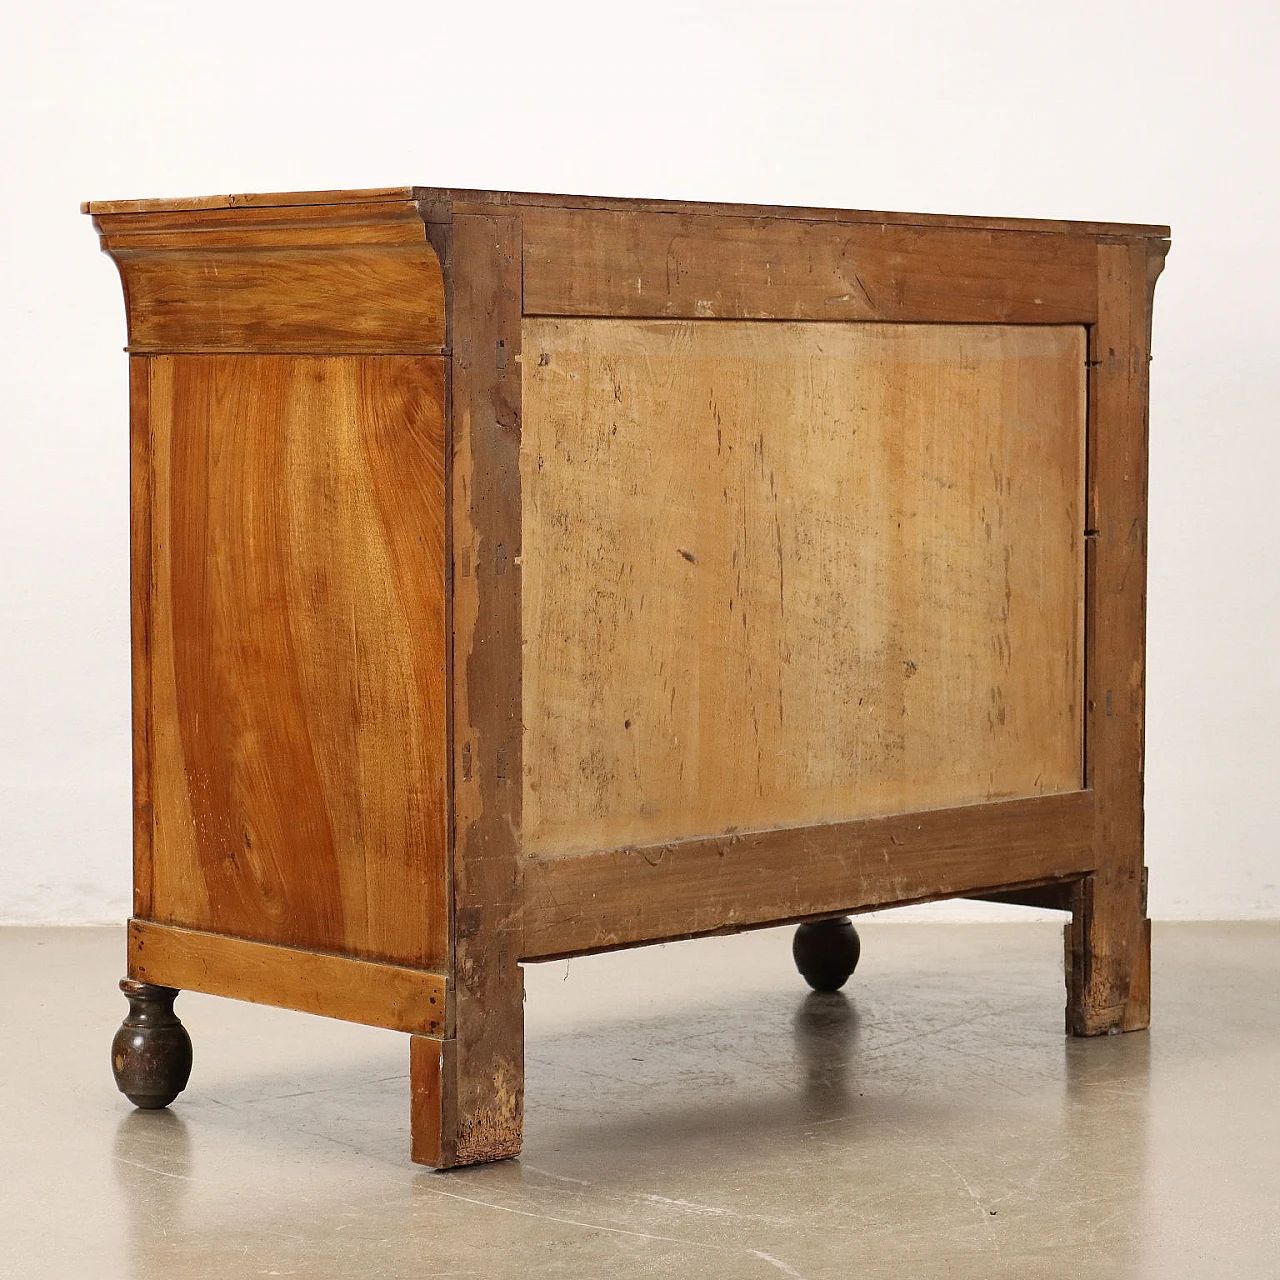 Walnut & poplar dresser with 4 drawers and turned legs, 19th century 10